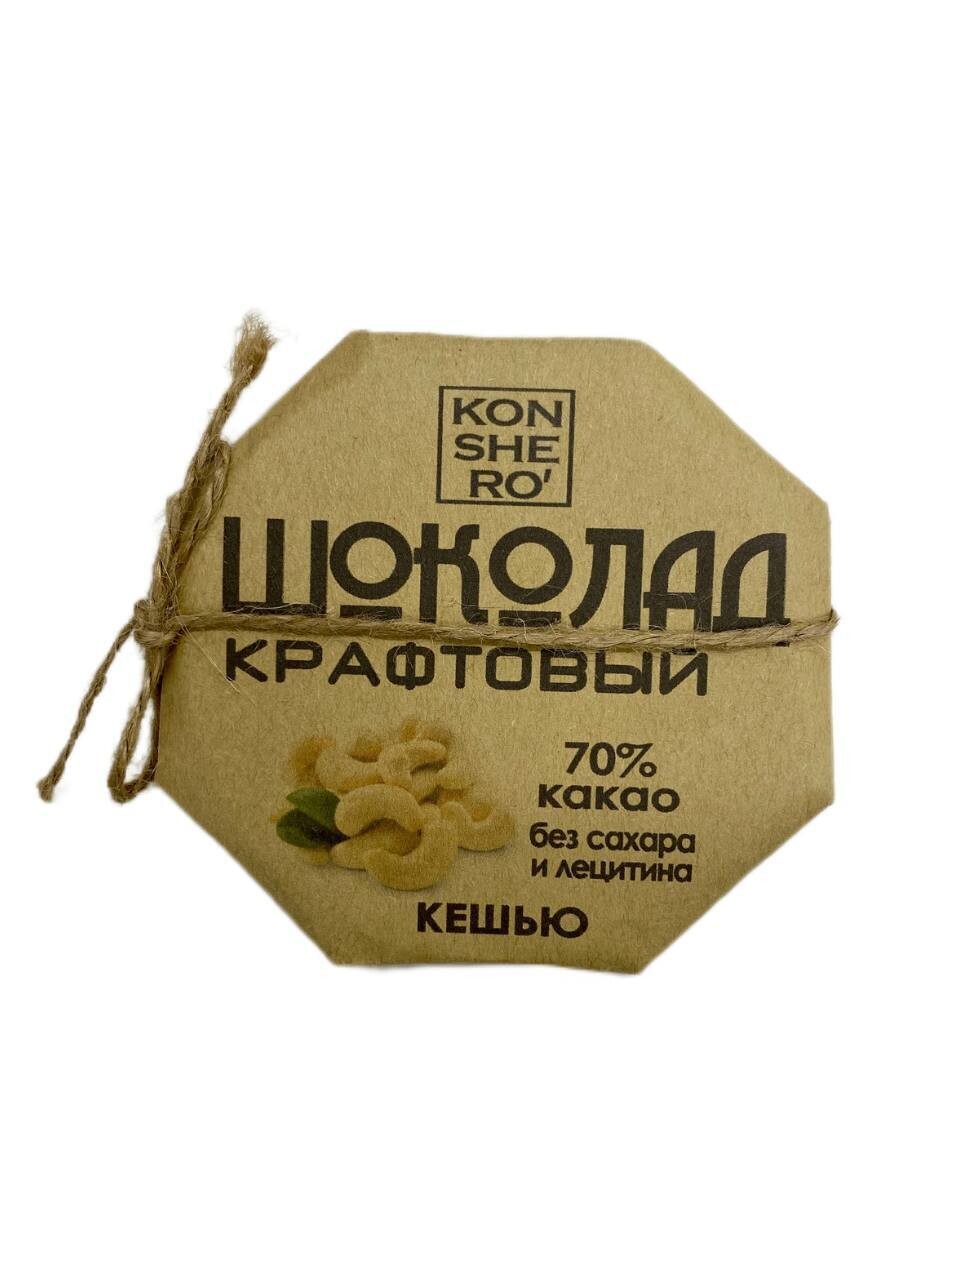 Шоколад на меду с орехами кешью, KONSHERO, 50 г